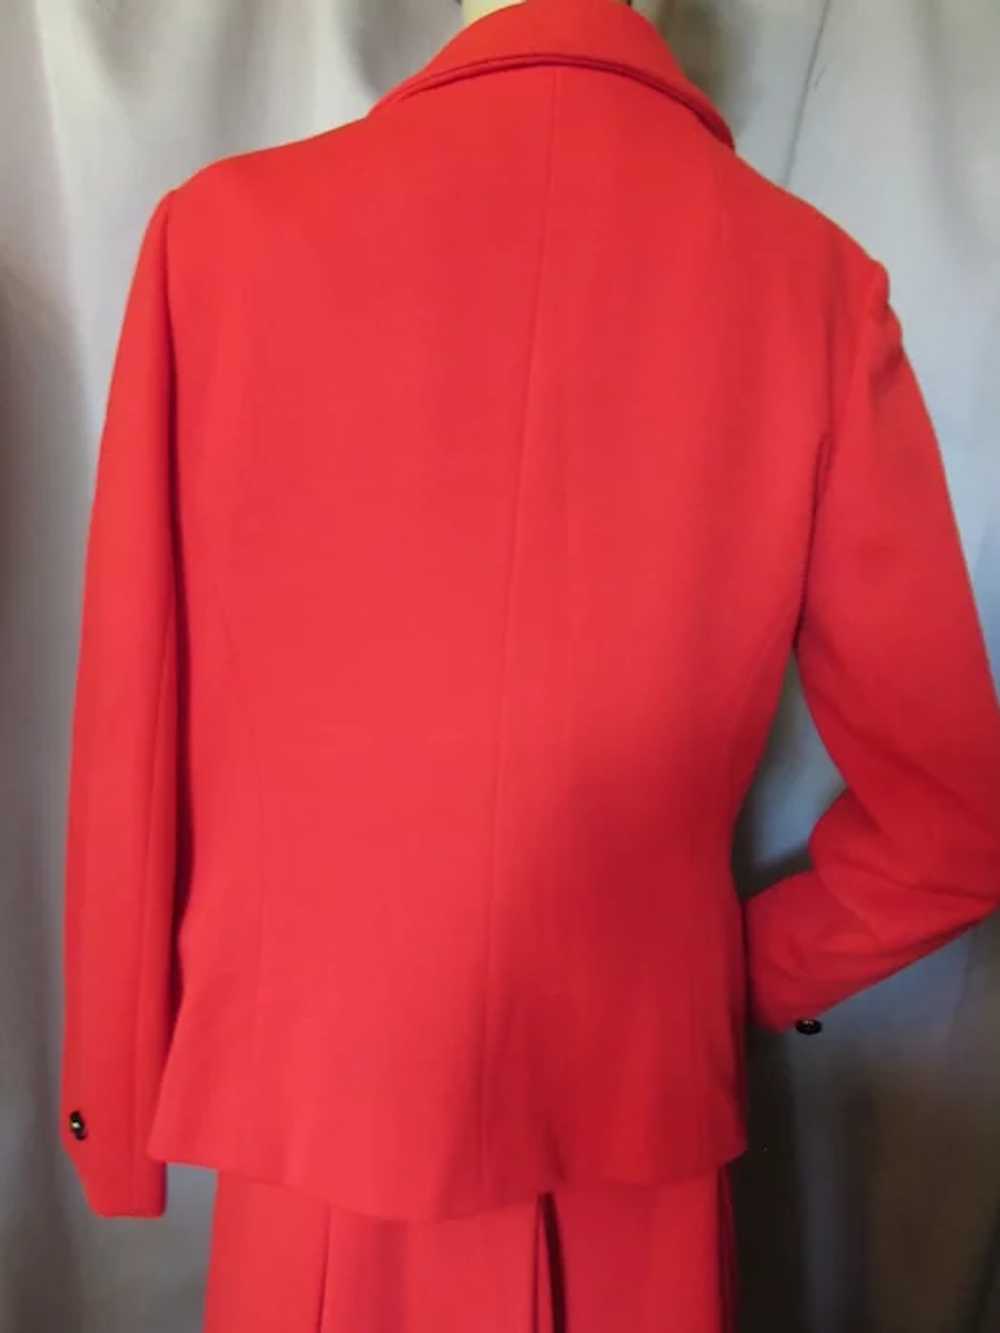 Cherry Red Knit Jacket Dress Set 1970 Era - image 10